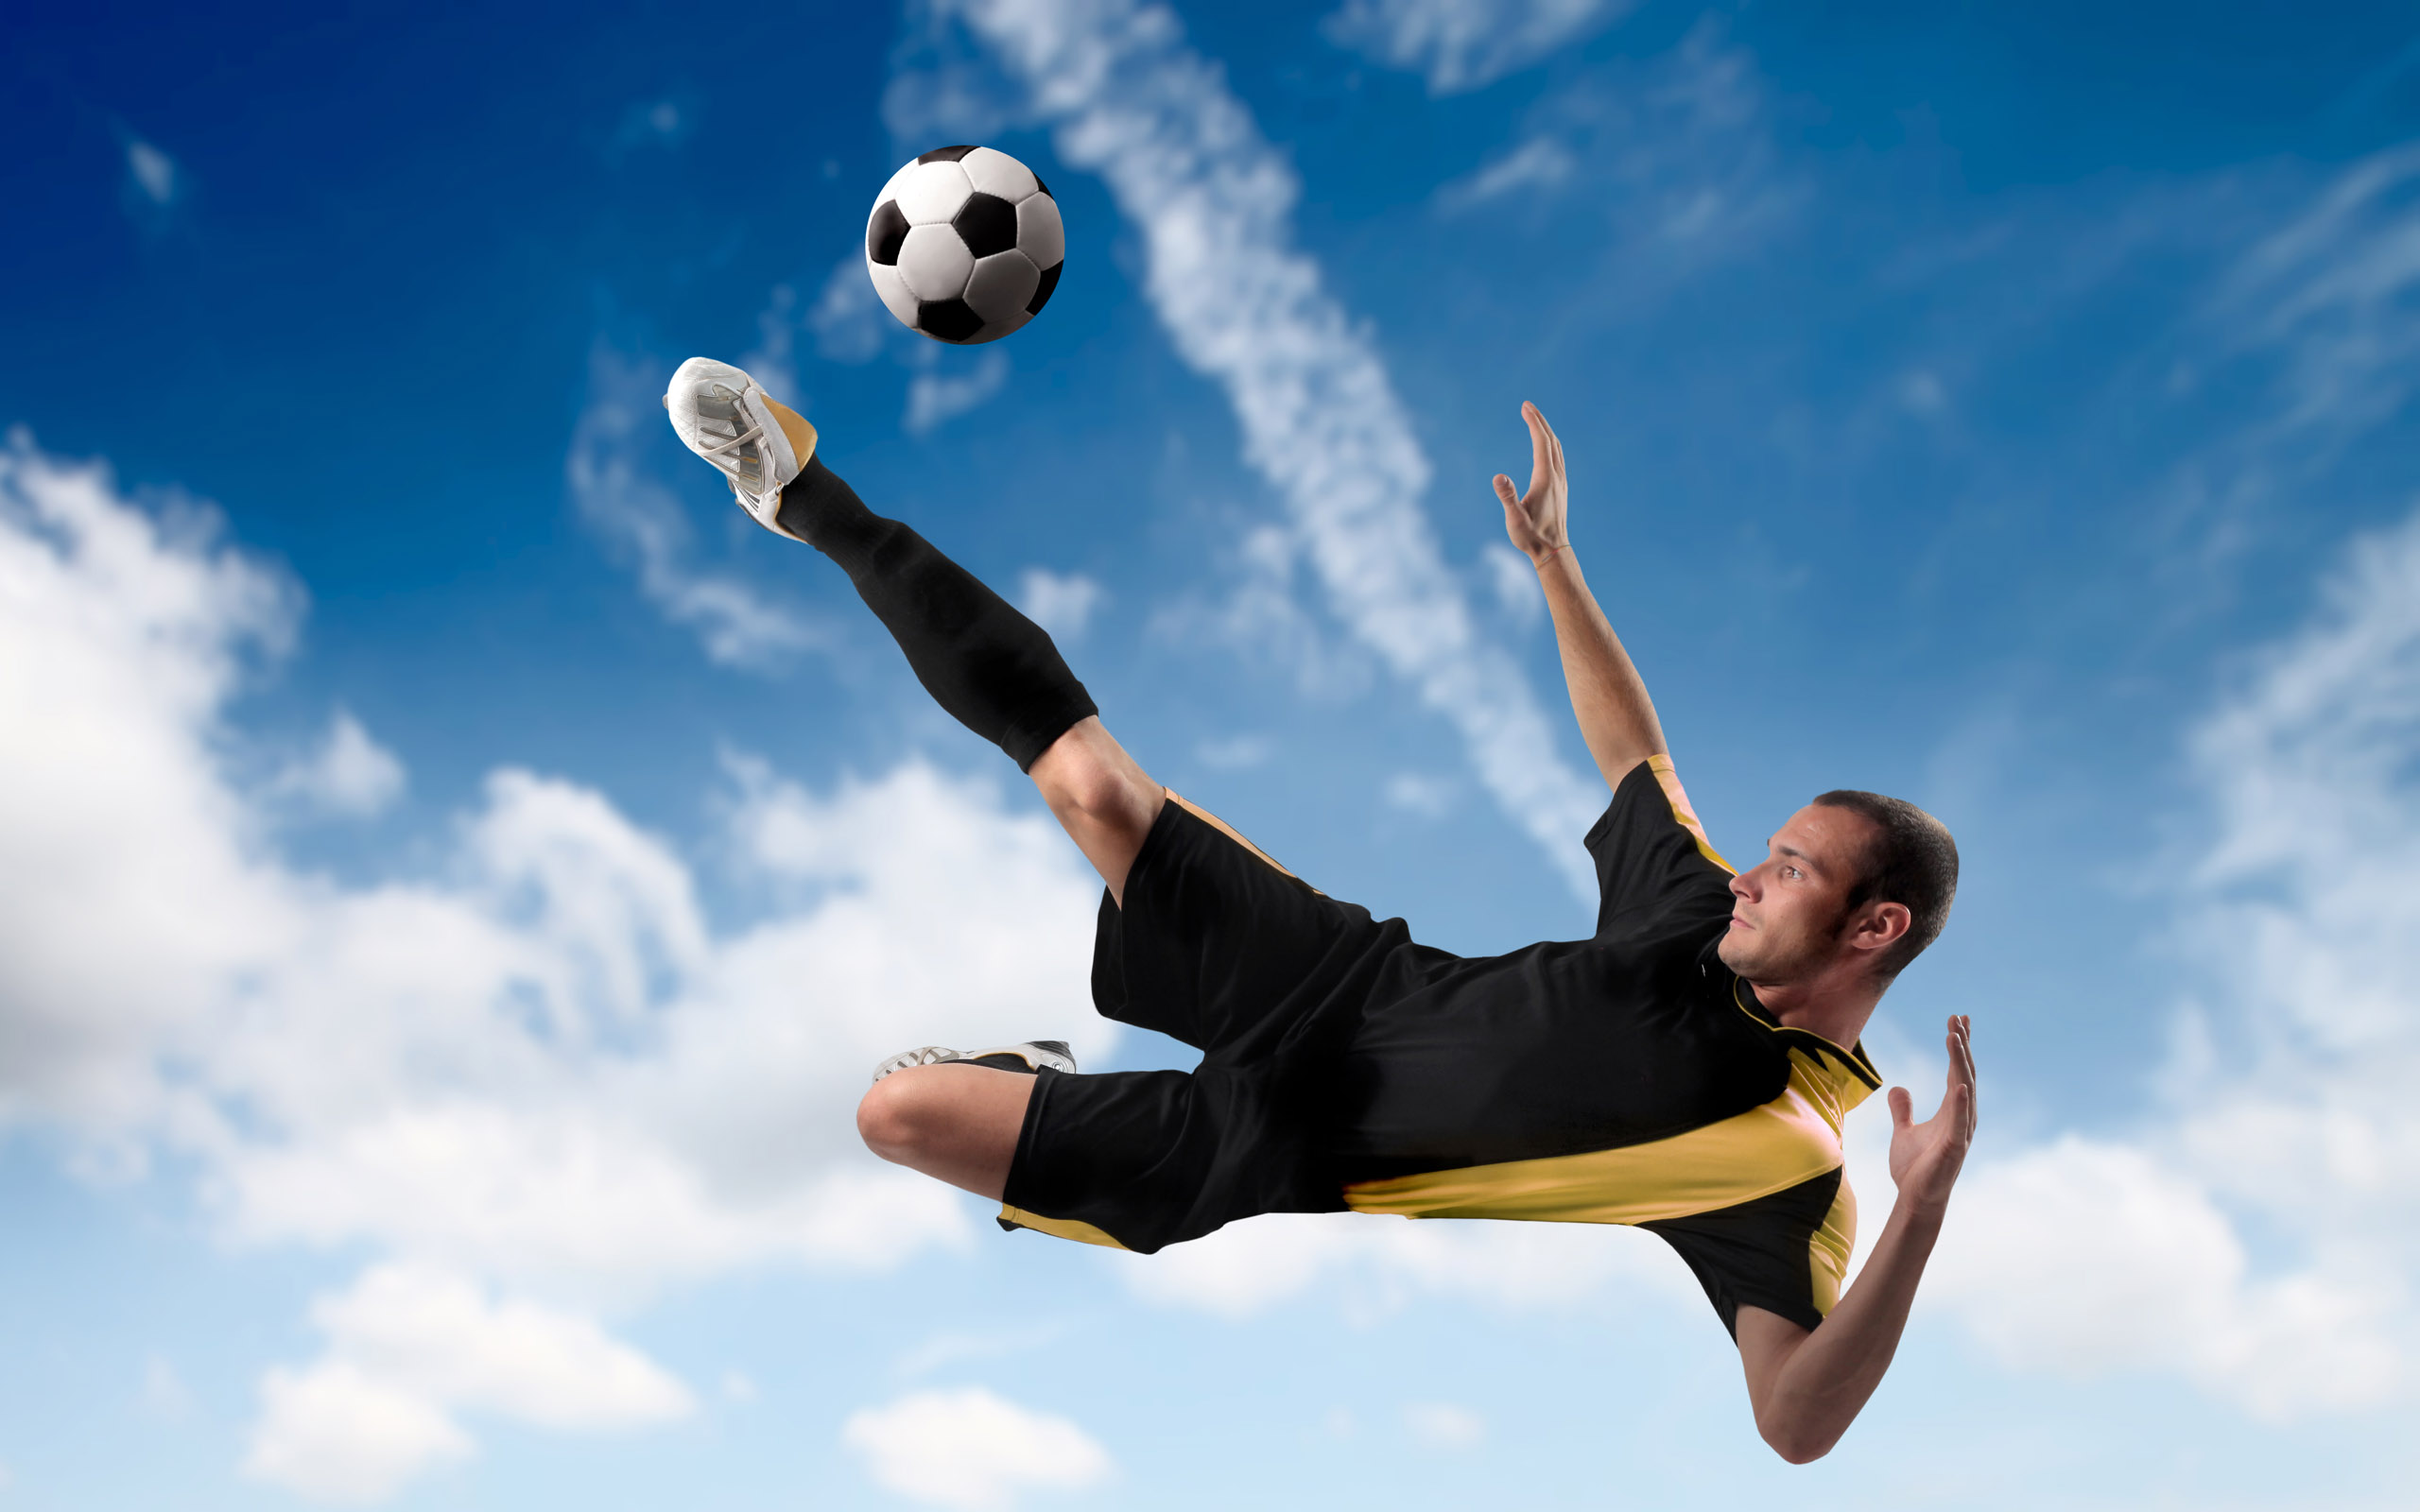 Download full size Kick the ball in flight Football wallpaper / 2560x1600